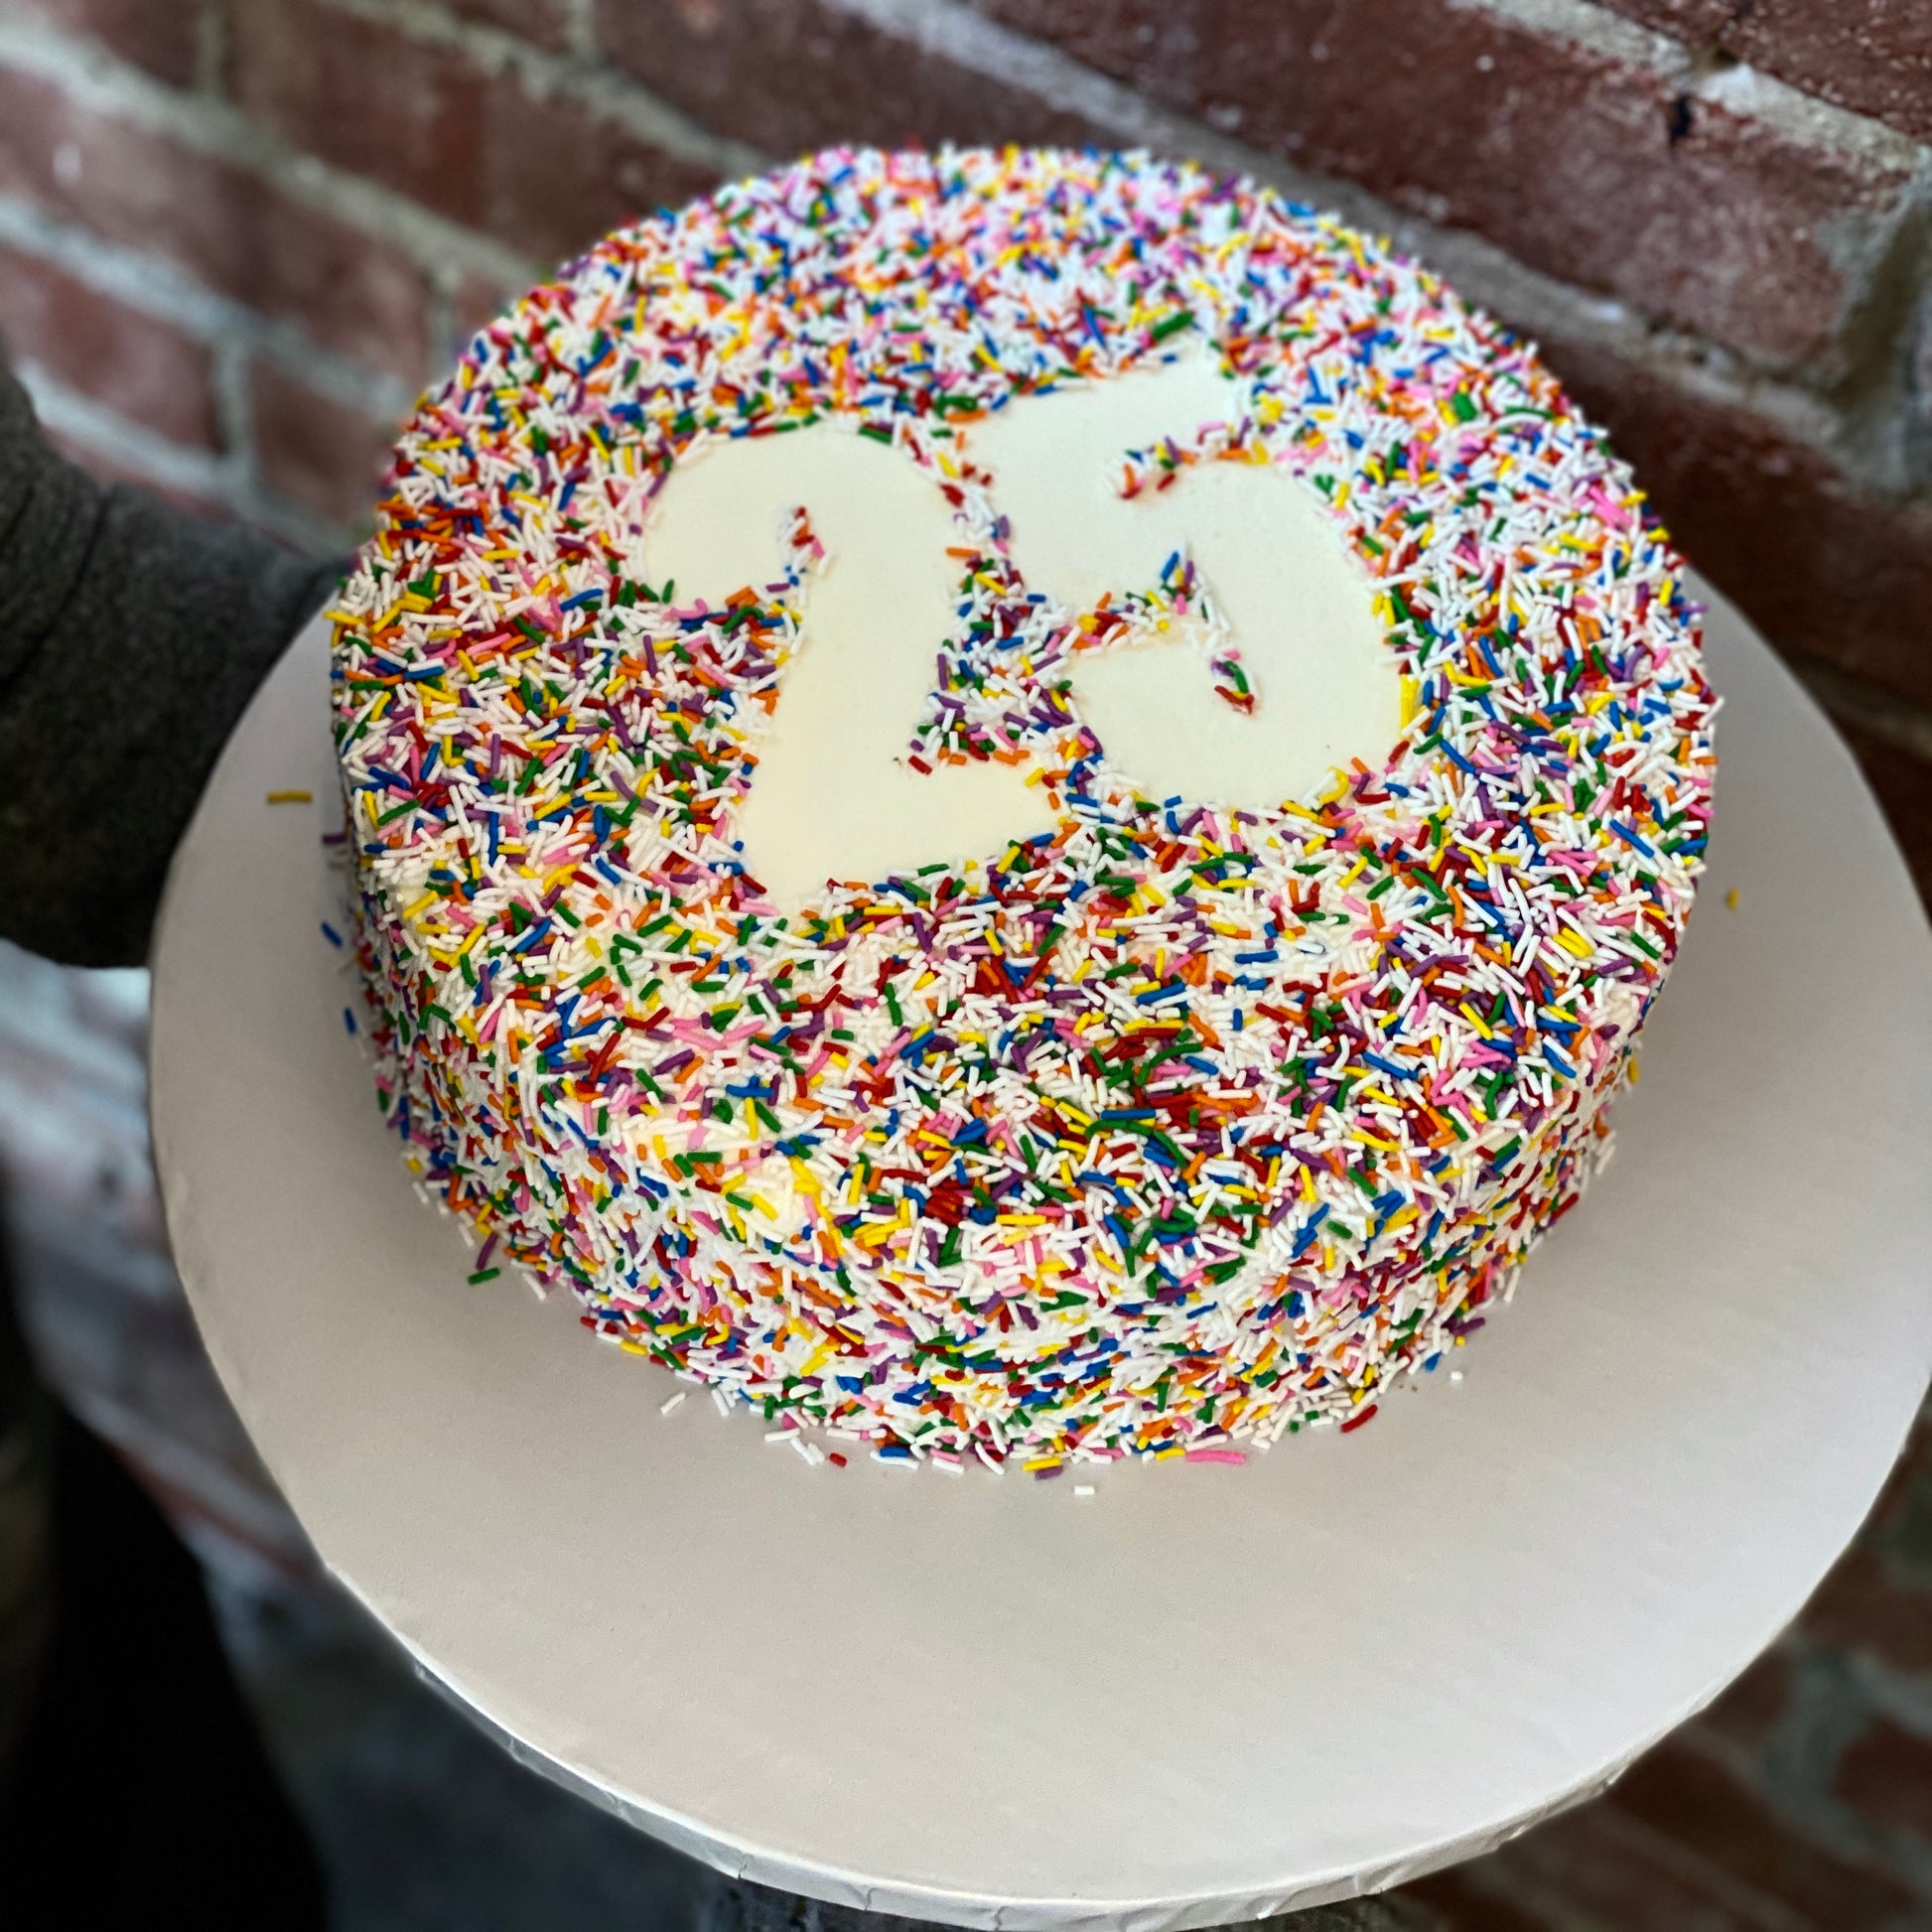 Birthday Cake Sprinkles - Sweets & Treats Blog